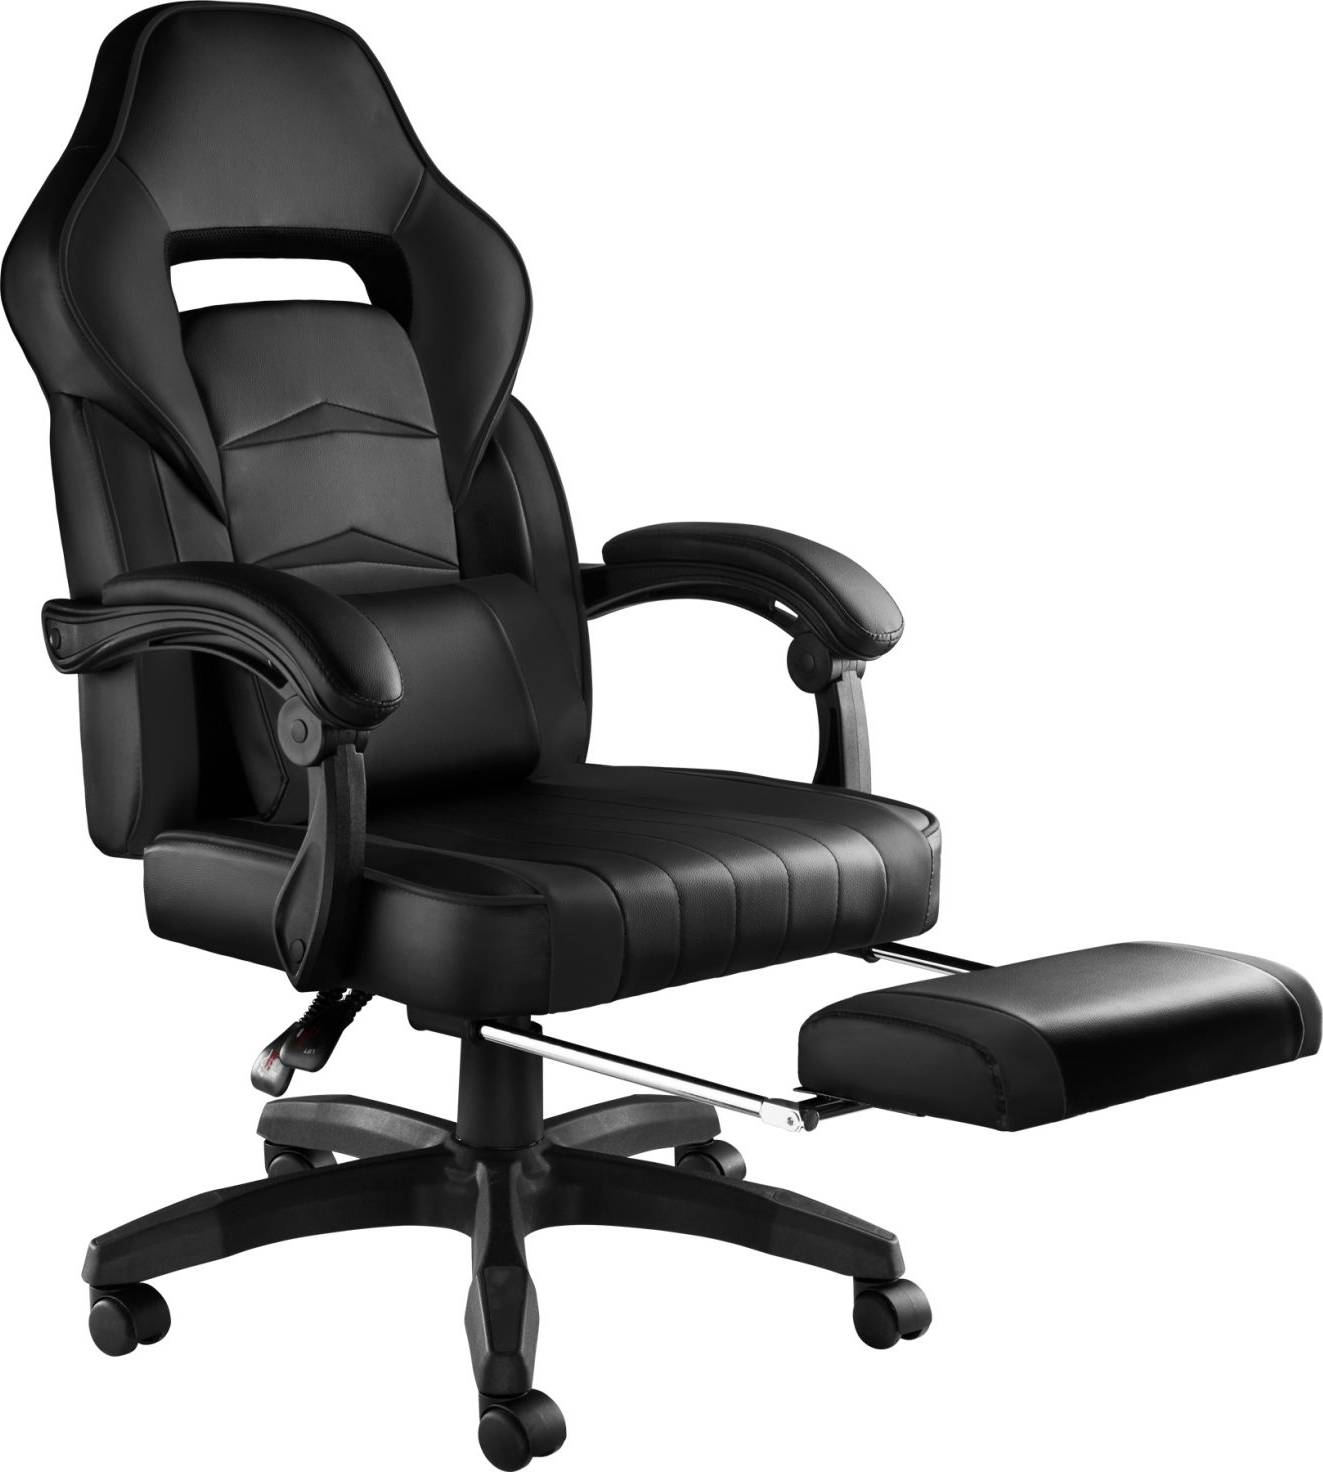  Bild på tectake Storm Gaming Chair - Black gamingstol